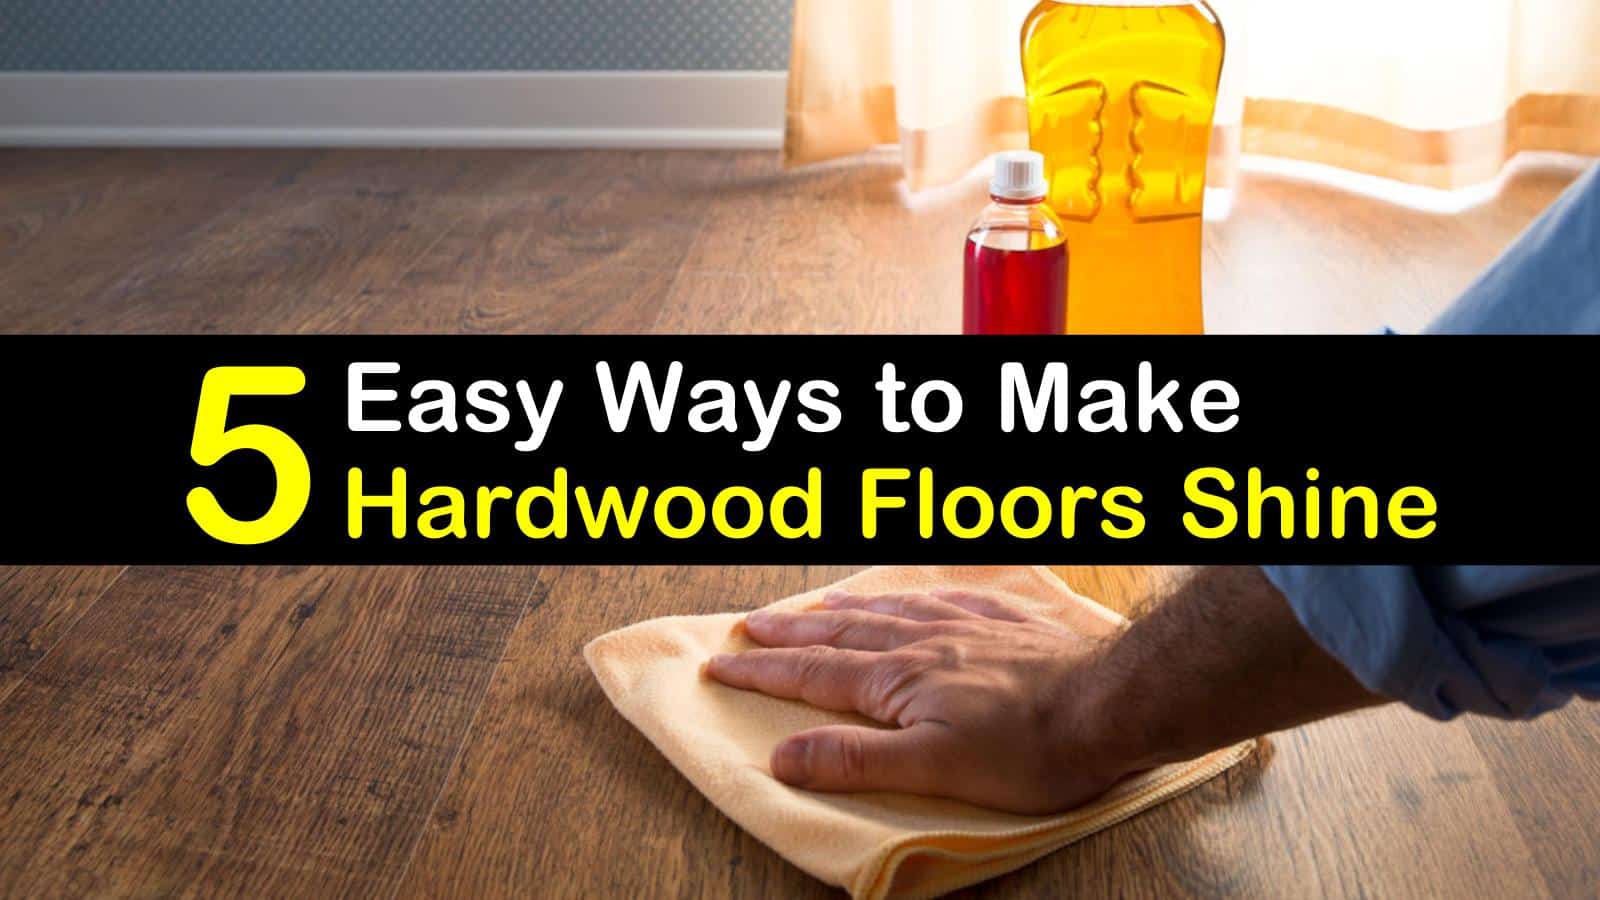 5 Easy Ways To Make Hardwood Floors Shine, How To Make Laminate Wood Floors Shine